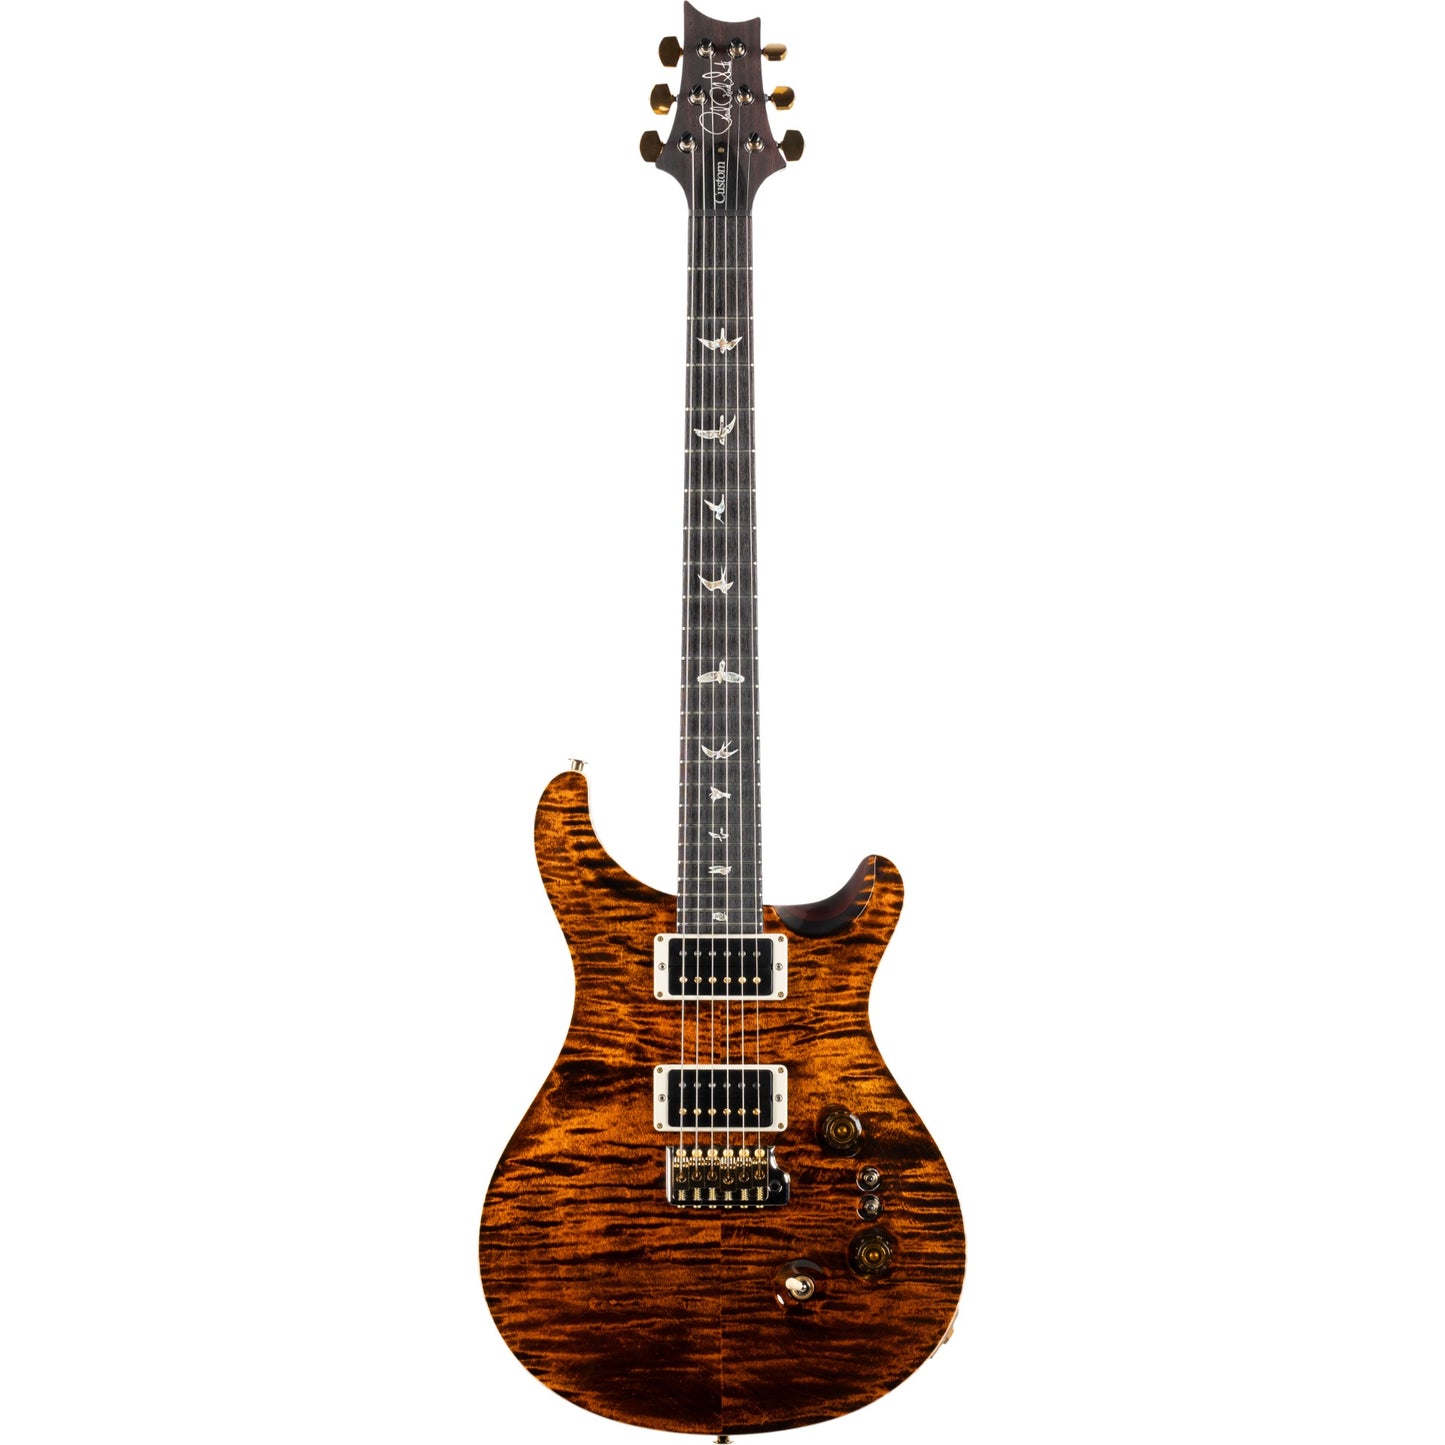 PRS Custom 24-08 10 Top Electric Guitar - Orange Tiger